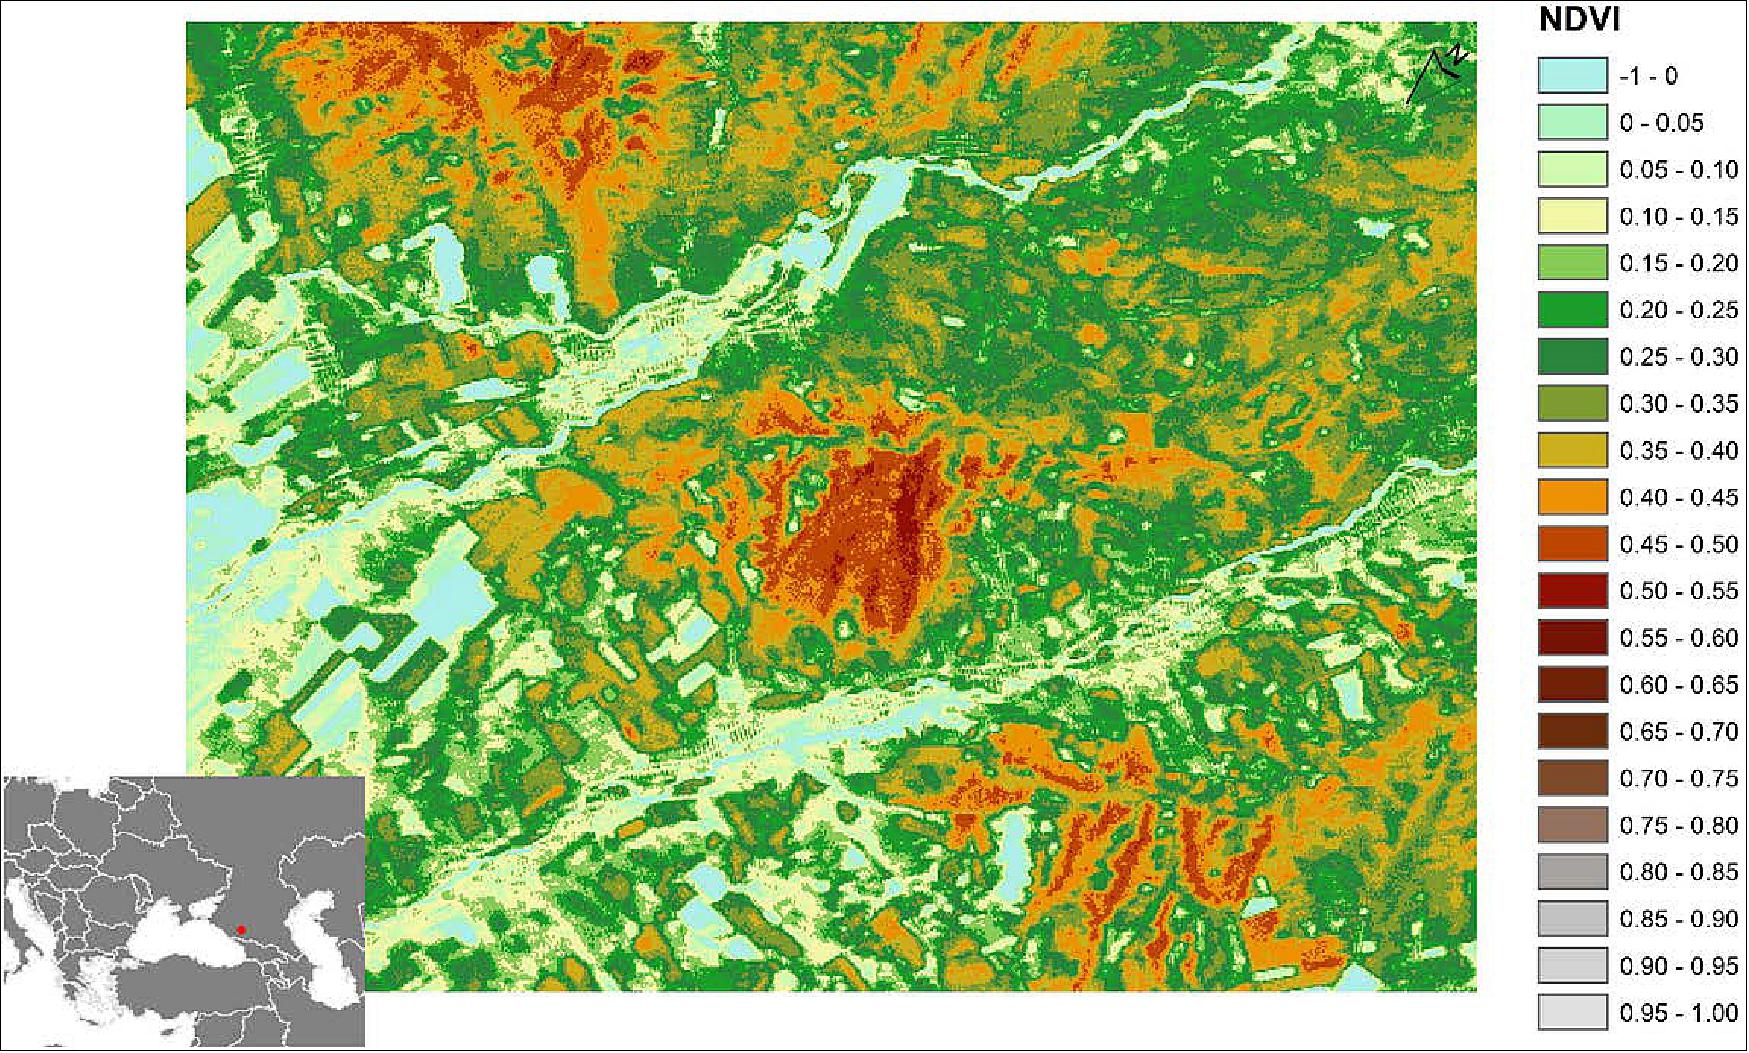 Figure 9: SMI (Spaceborne Multispectral Imager) NDVI map of Kubin, Karachaevo-Cherkessia, Russia, captured on 16 August 2016 at 13:38:40 MSK (Moscow Standard Time), image credit: DOST/ASTI